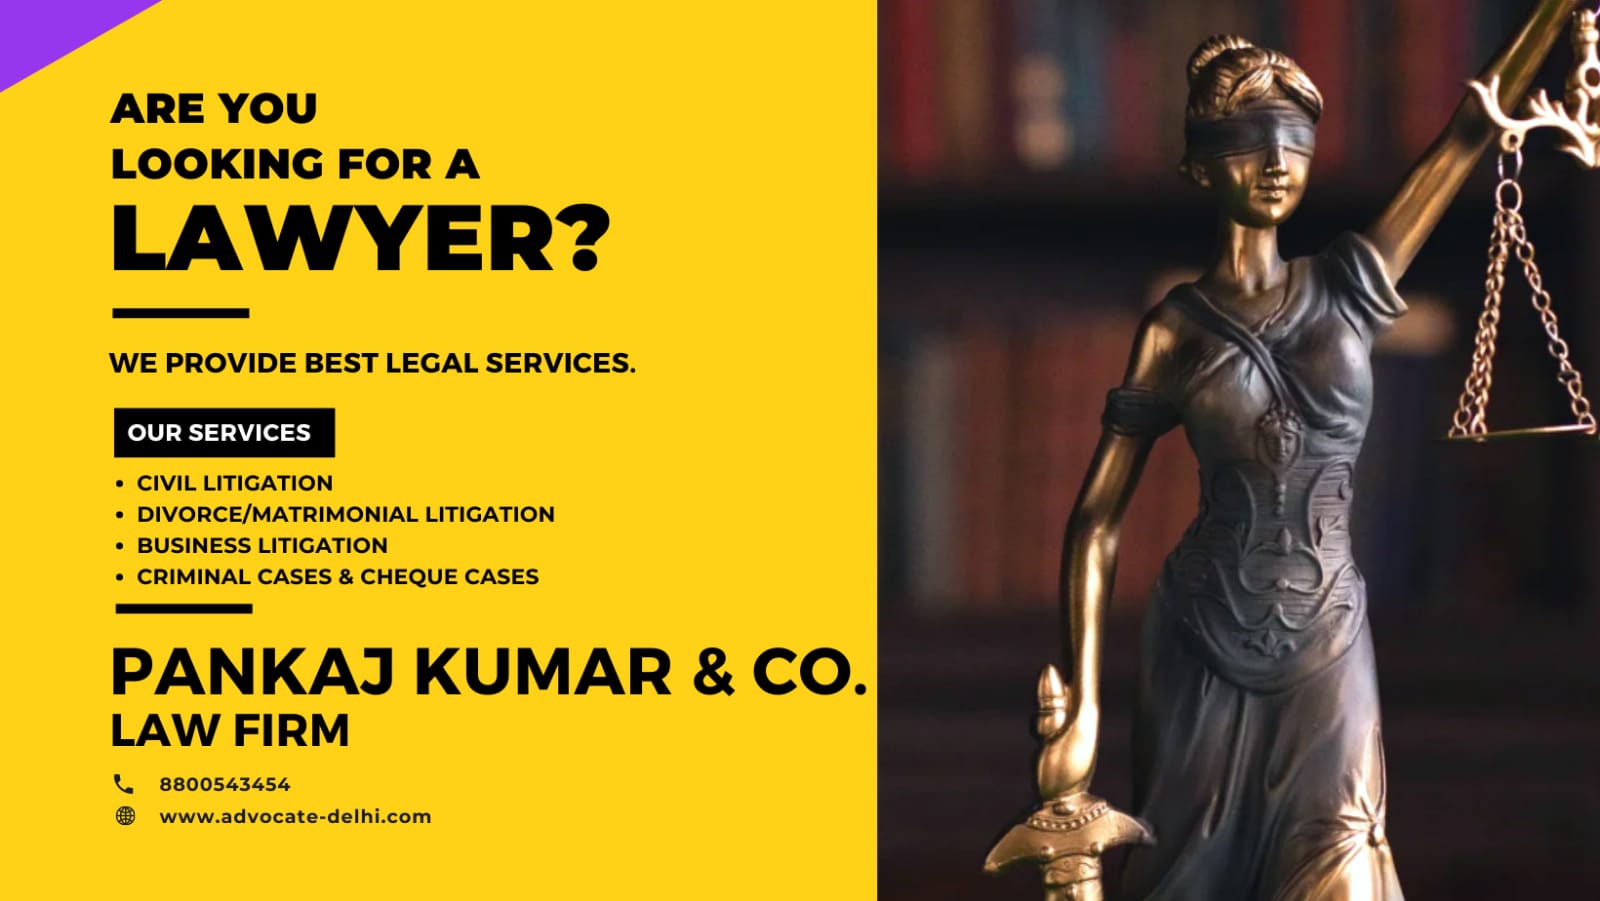 Pankaj Kumar & Co. | Top Law Firm in Rohini Delhi | Call @ 8800543454 for instant advice